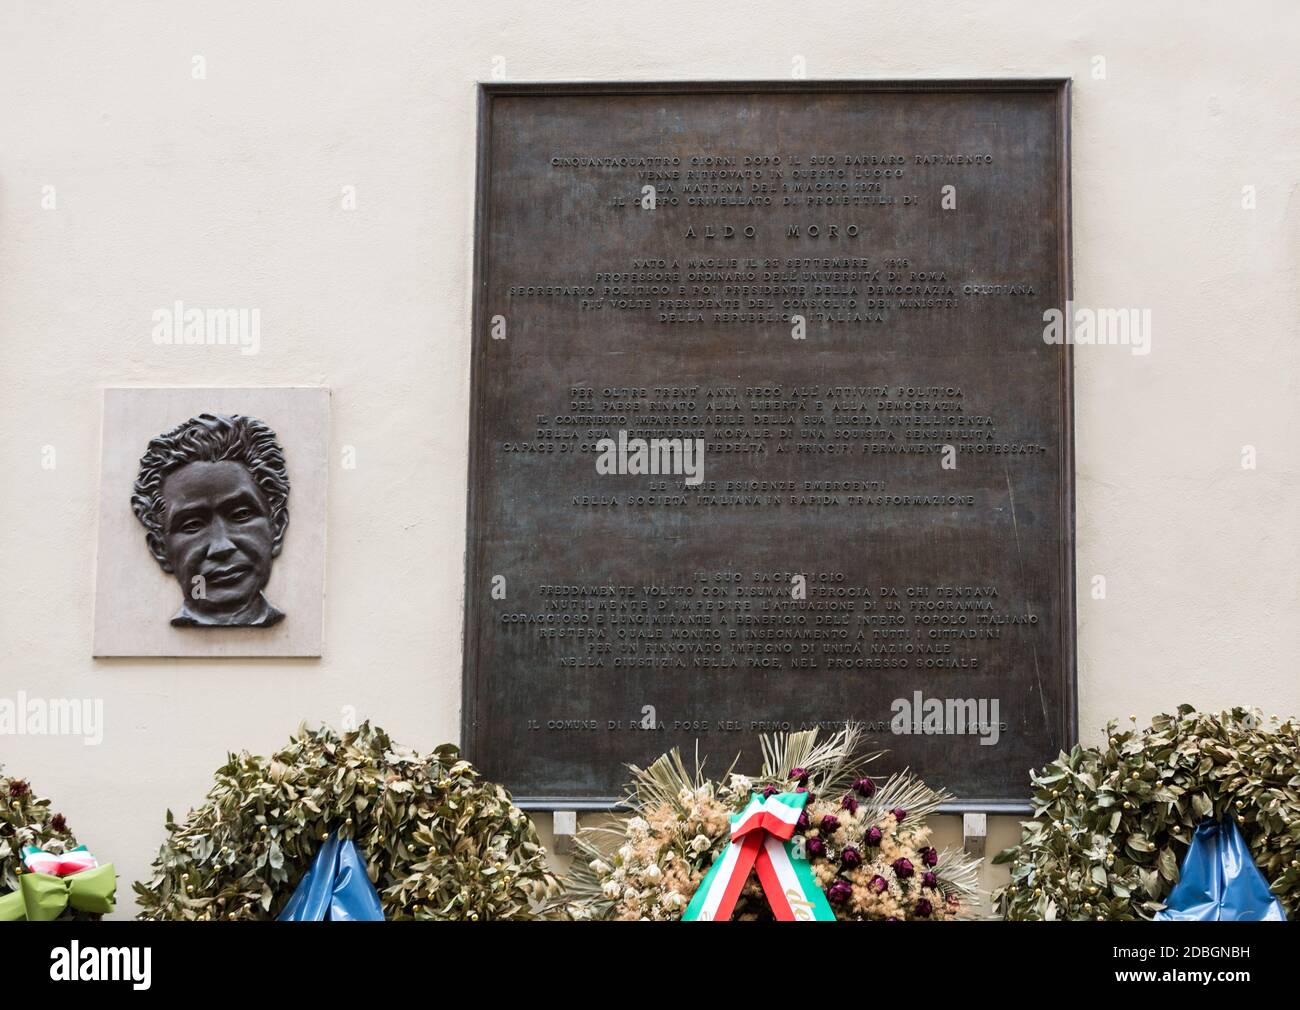 Memorial to Aldo Moro, in via Caetani, Rome, Italy Stock Photo